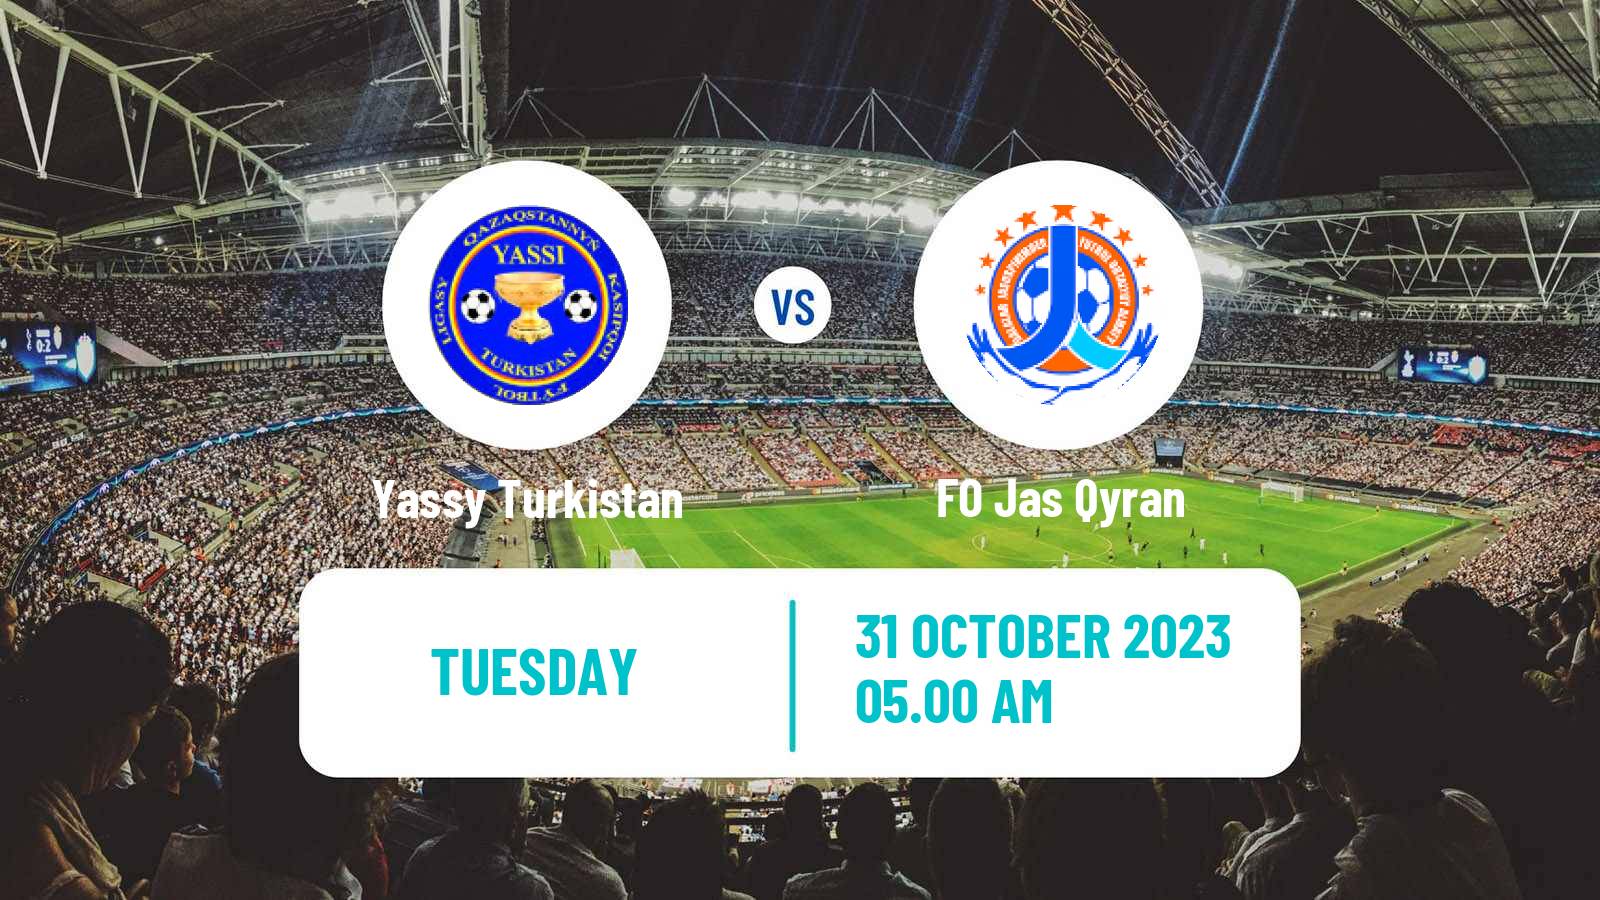 Soccer Kazakh First Division Yassy Turkistan - Jas Qyran